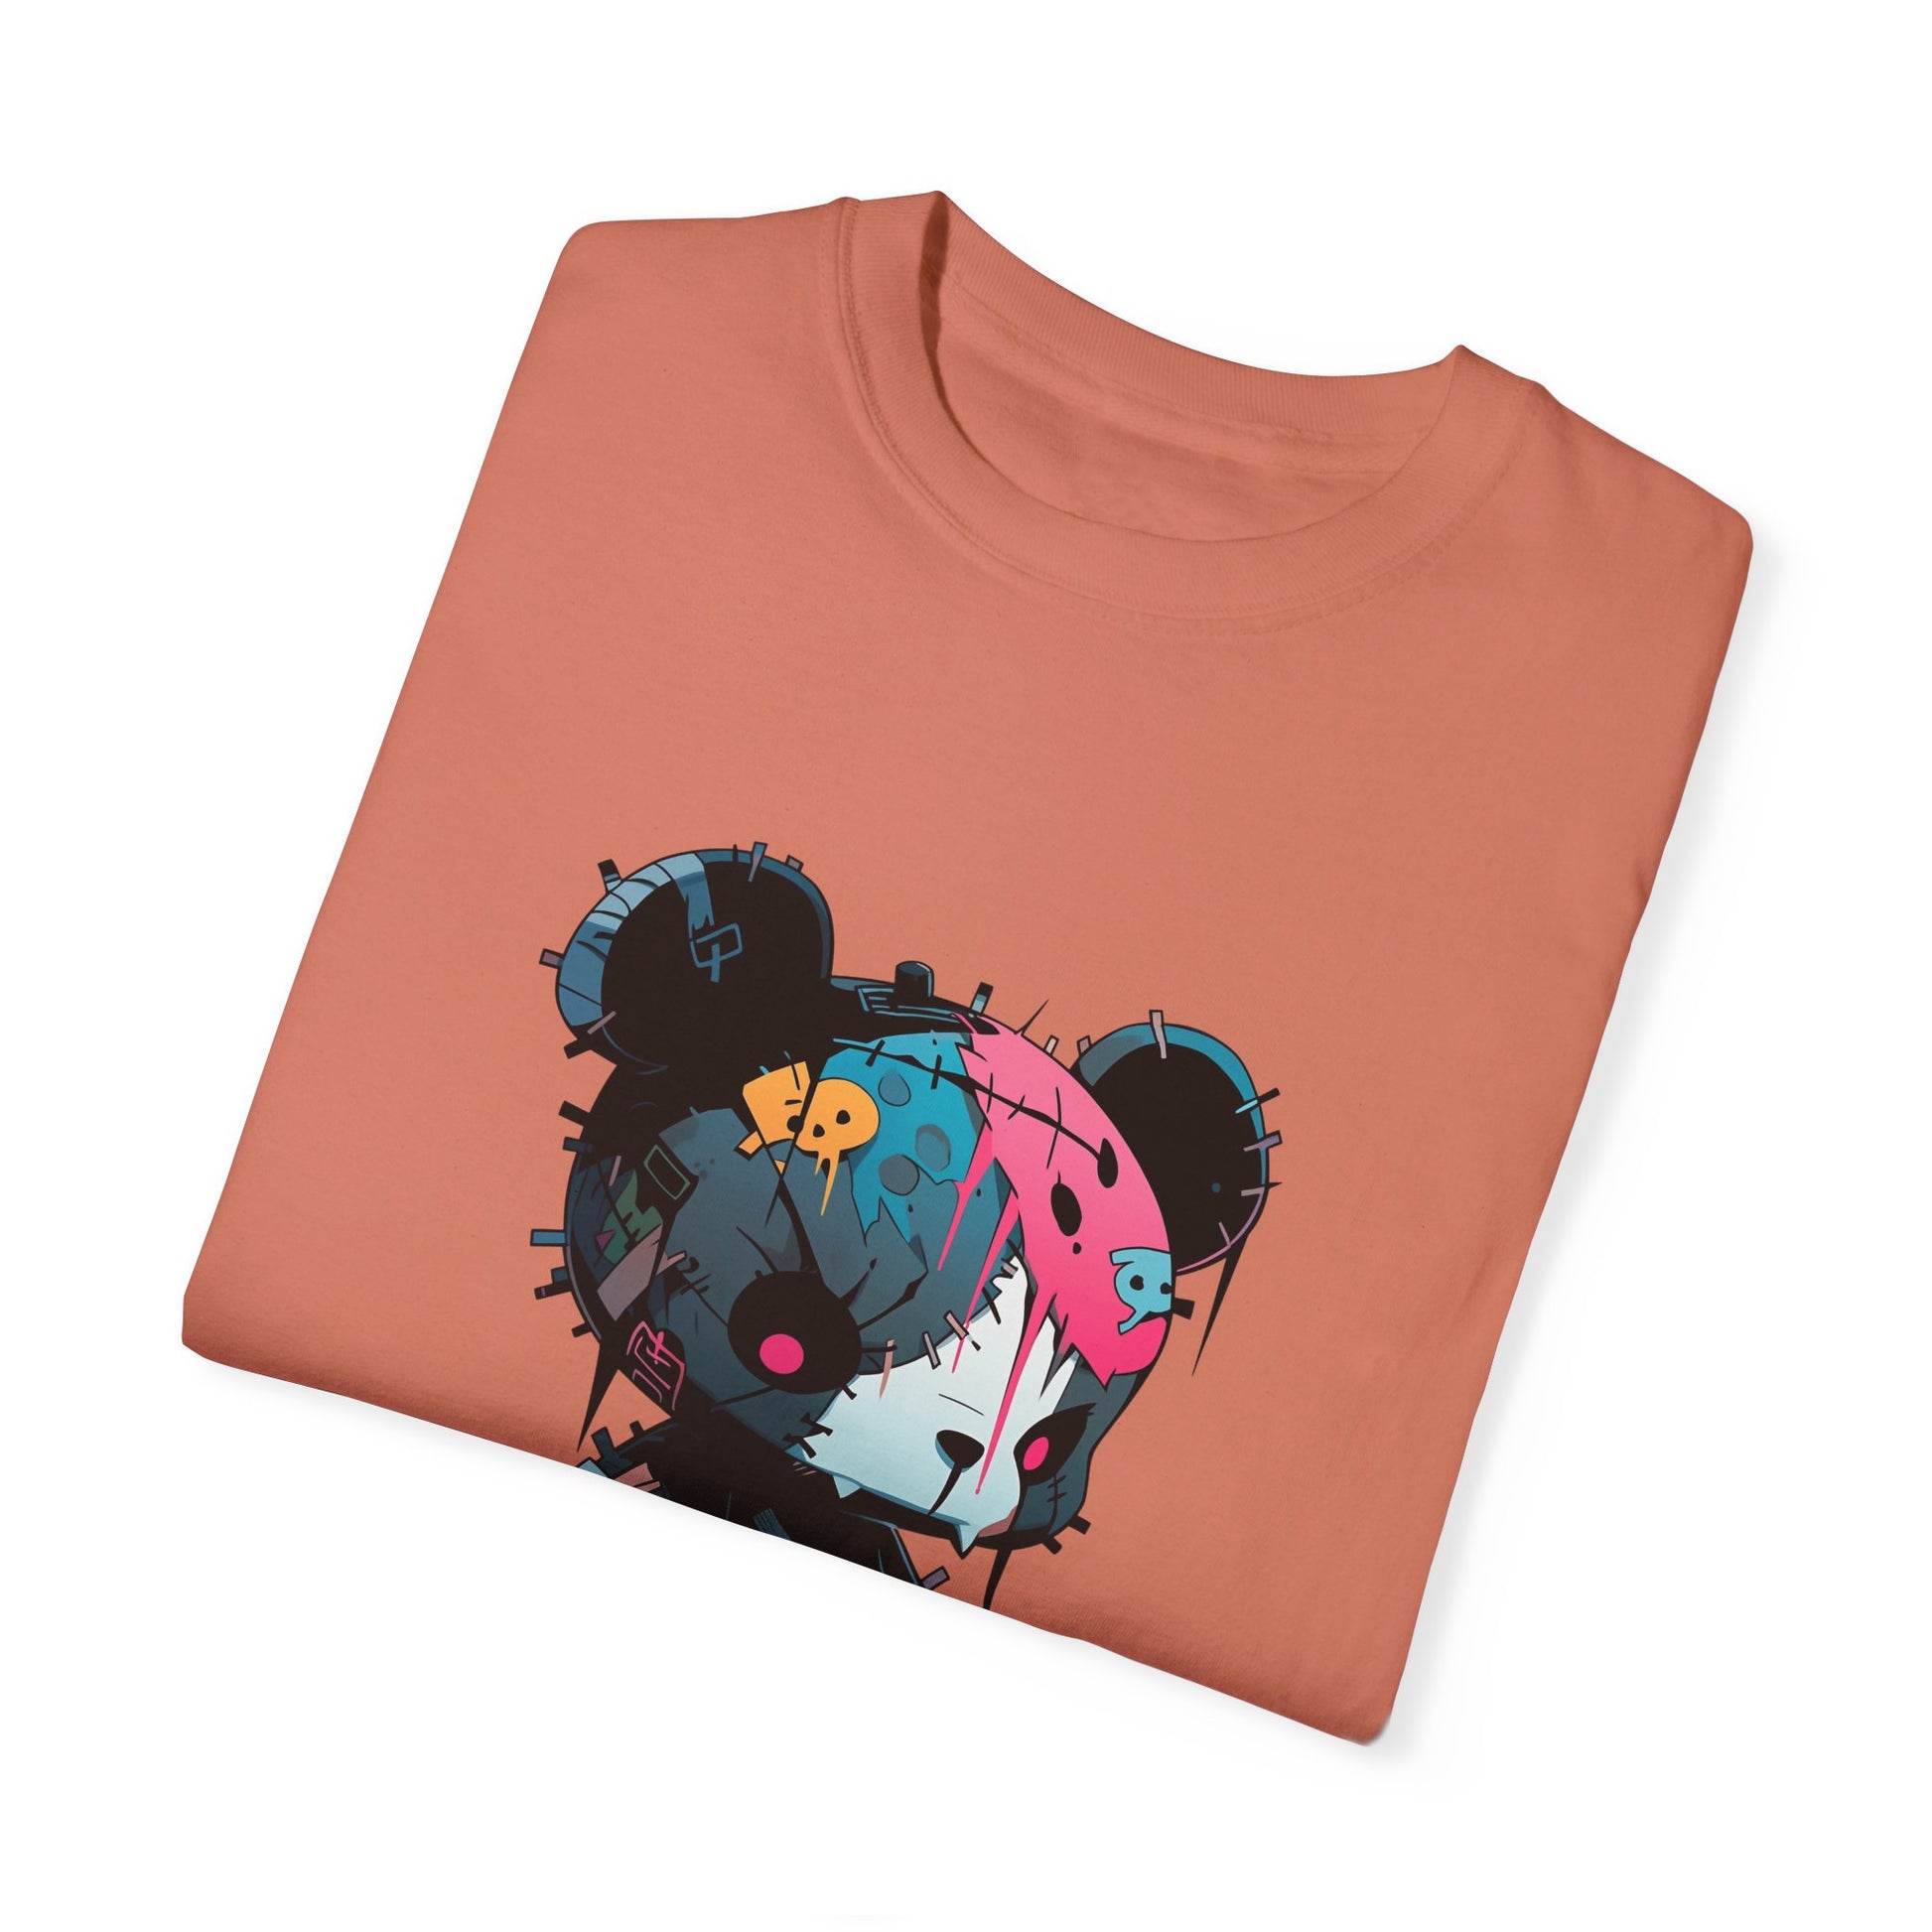 Hip Hop Teddy Bear Graphic Unisex Garment-dyed T-shirt Cotton Funny Humorous Graphic Soft Premium Unisex Men Women Terracotta T-shirt Birthday Gift-56